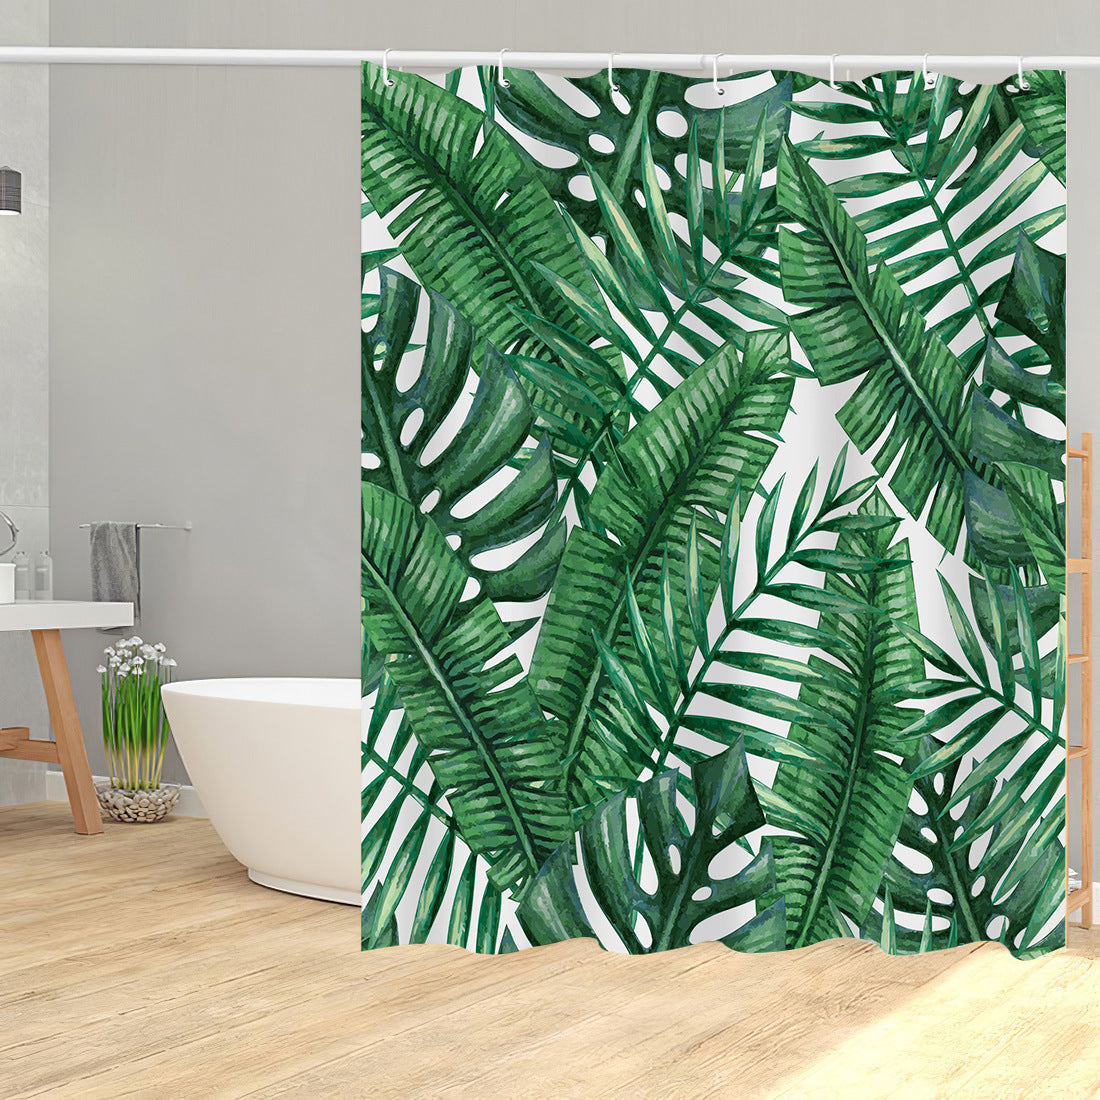 Green Palm Tree Fabric Shower Curtain for Bathroom